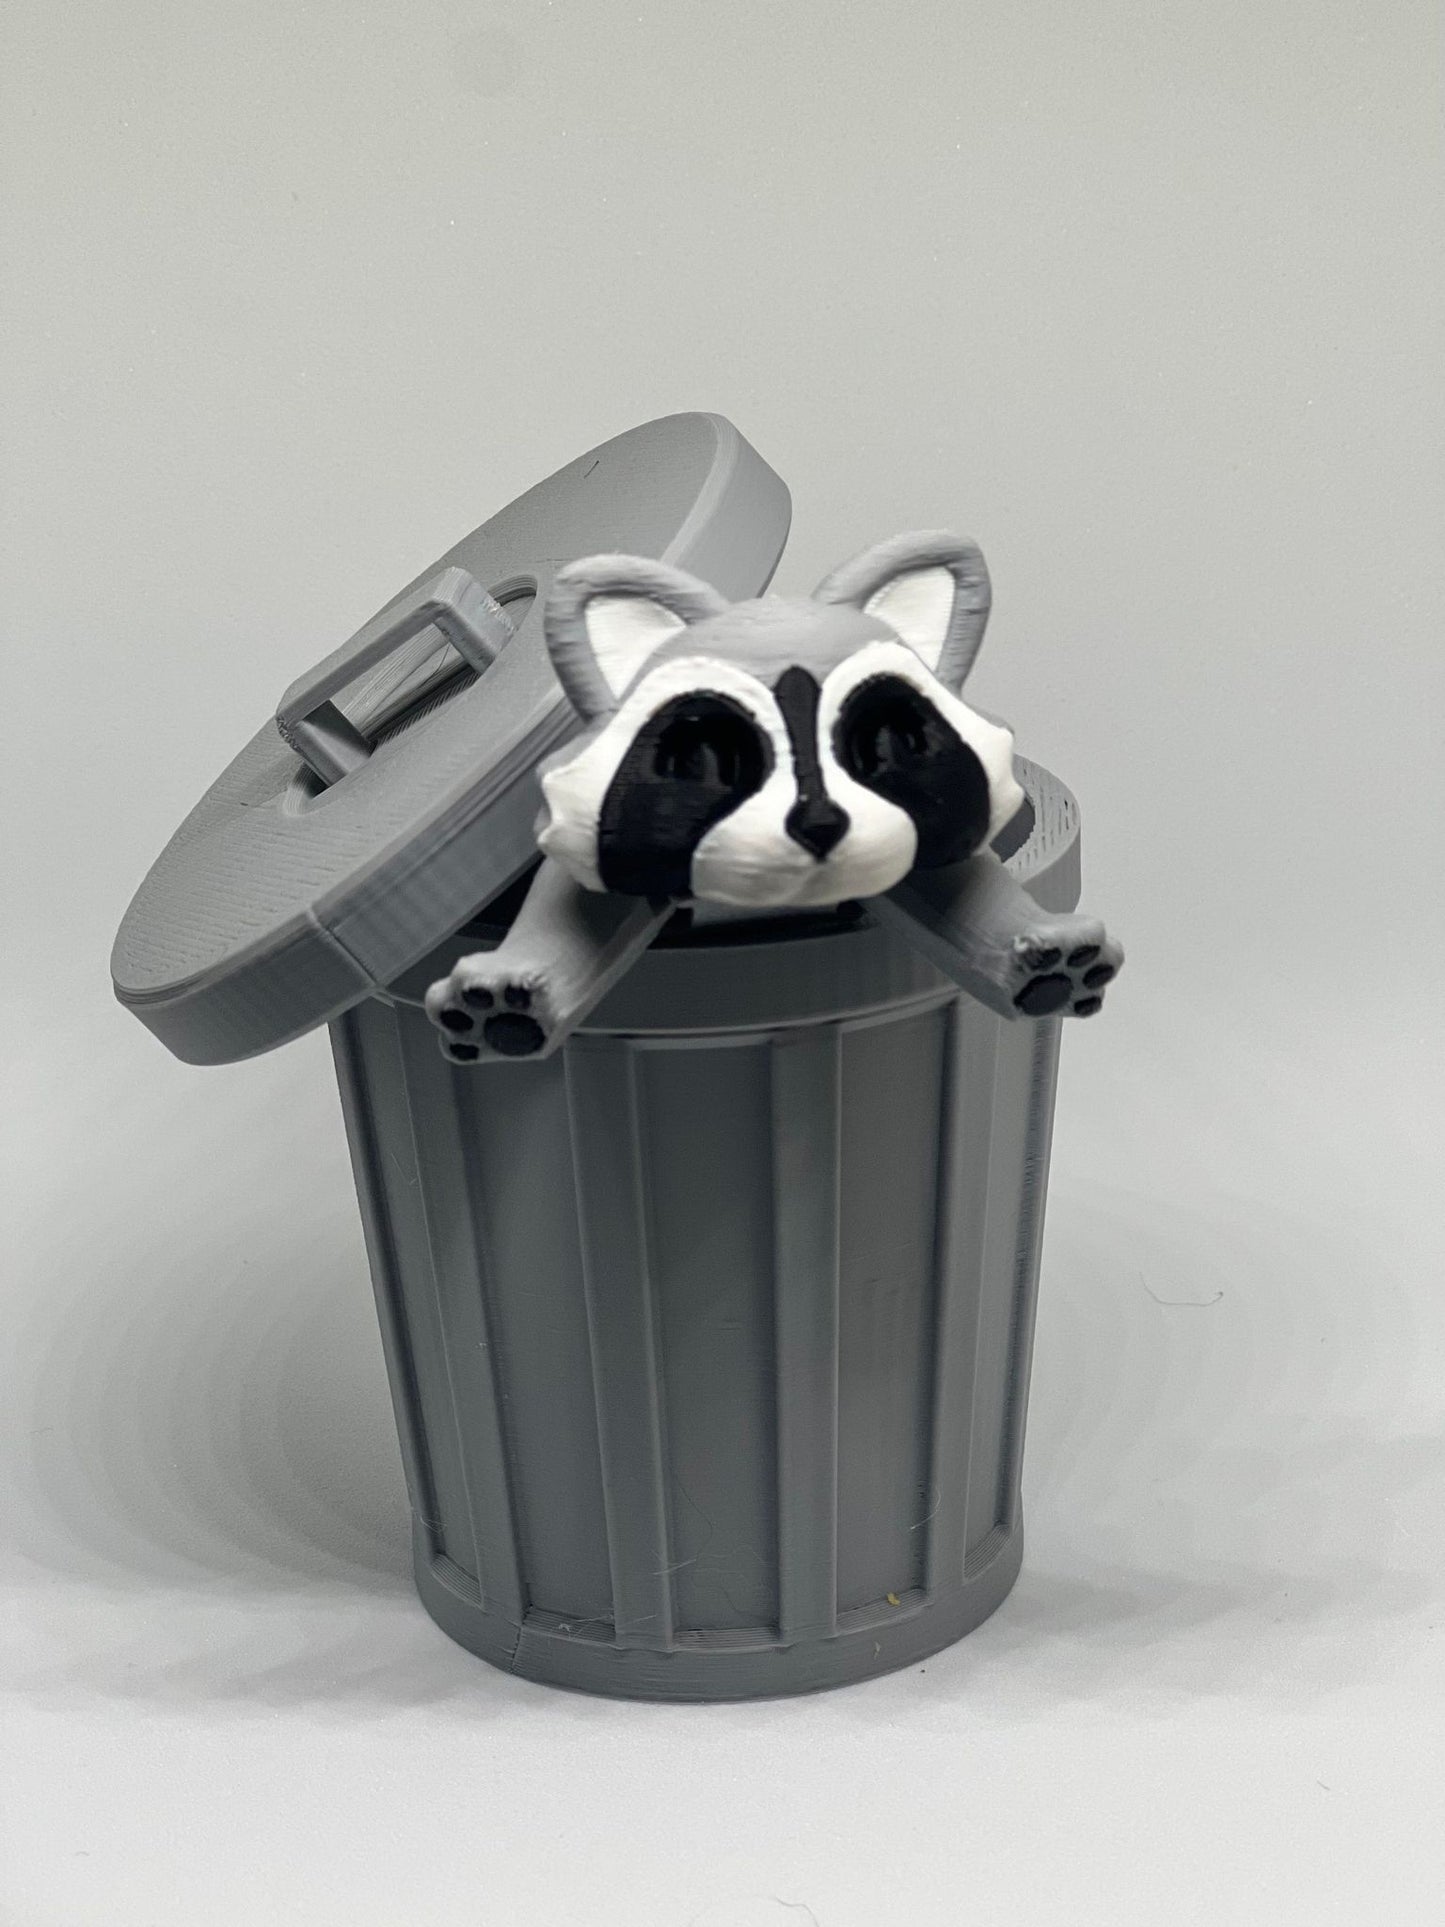 3D printed Raccoons in Trash Can!